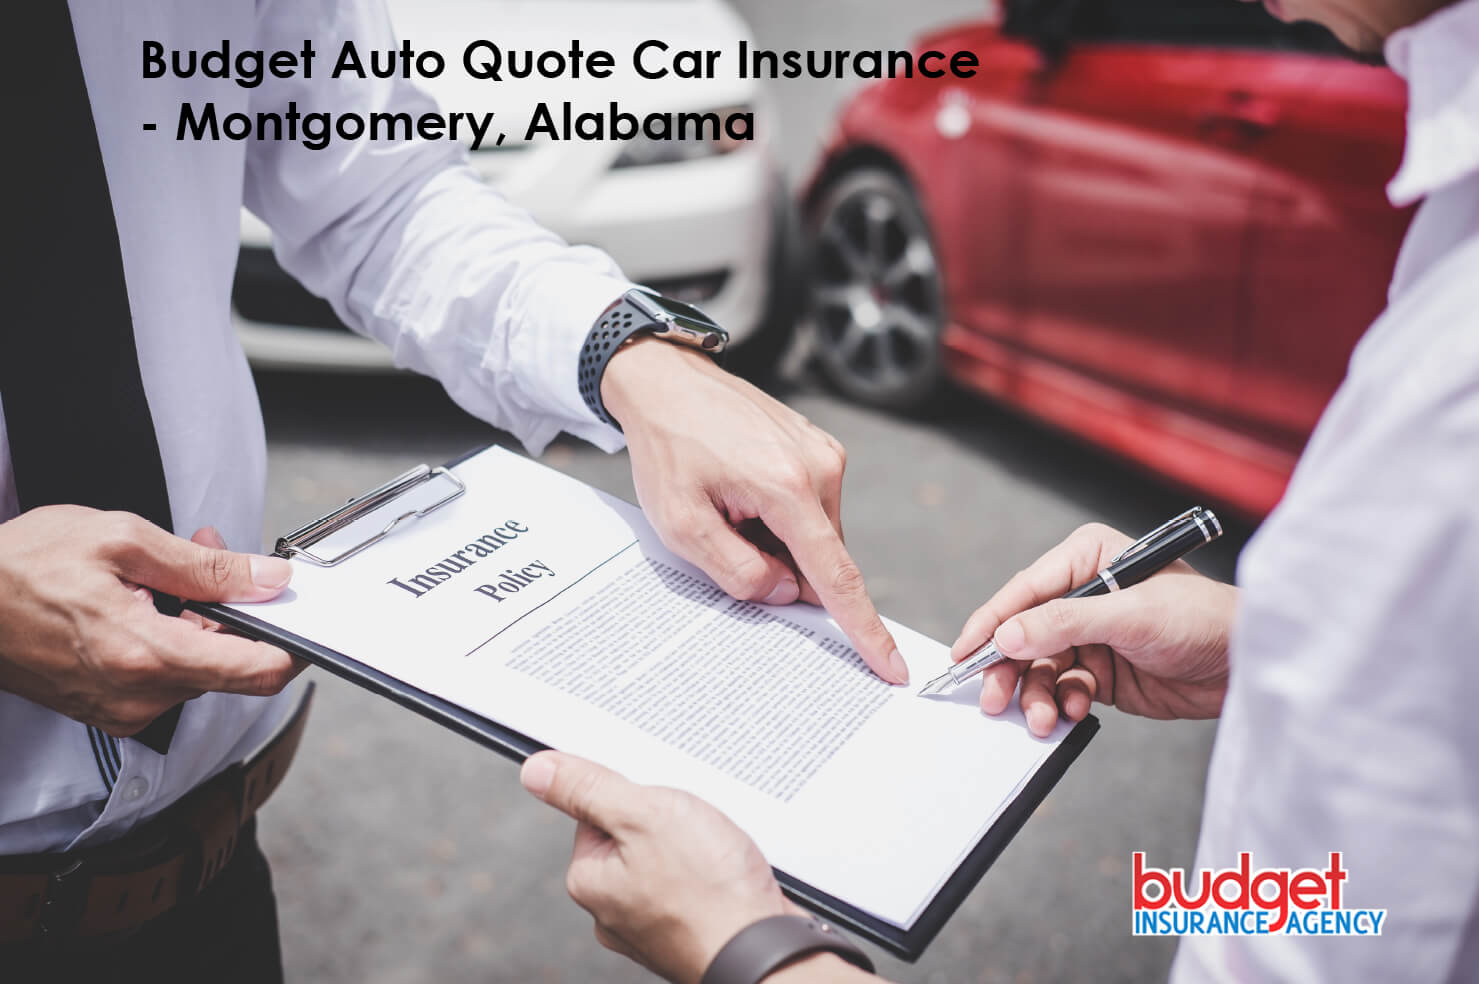 Budget Auto Quote Car Insurance - Montgomery, Alabama